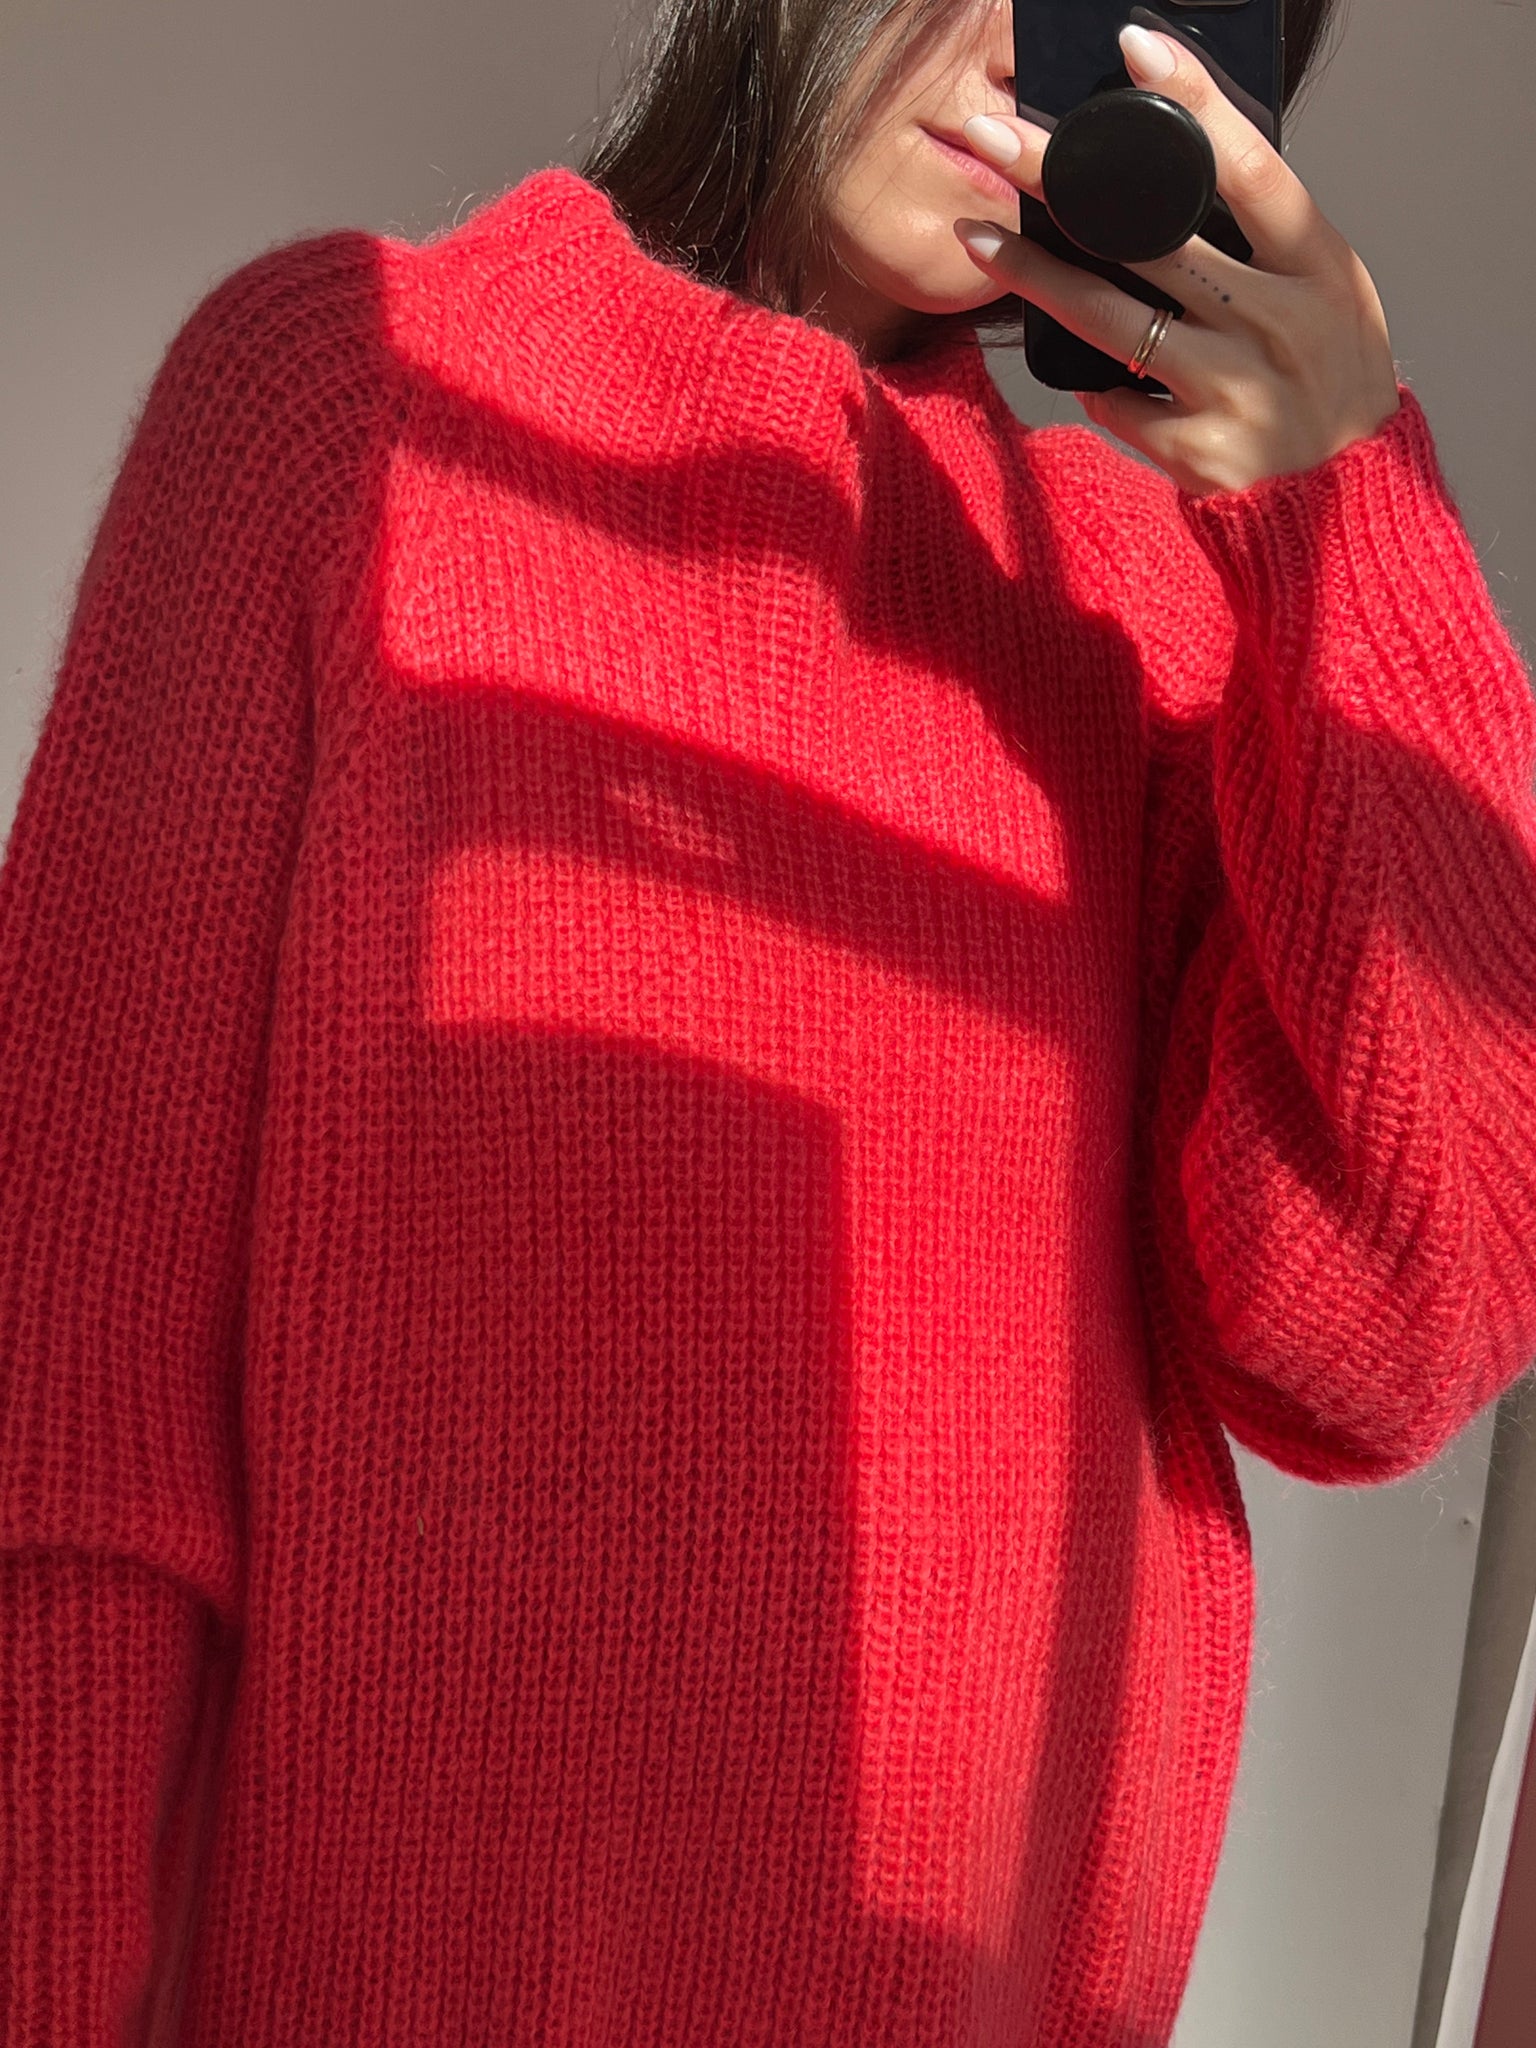 Hot pink mohair tunic/sweater dress